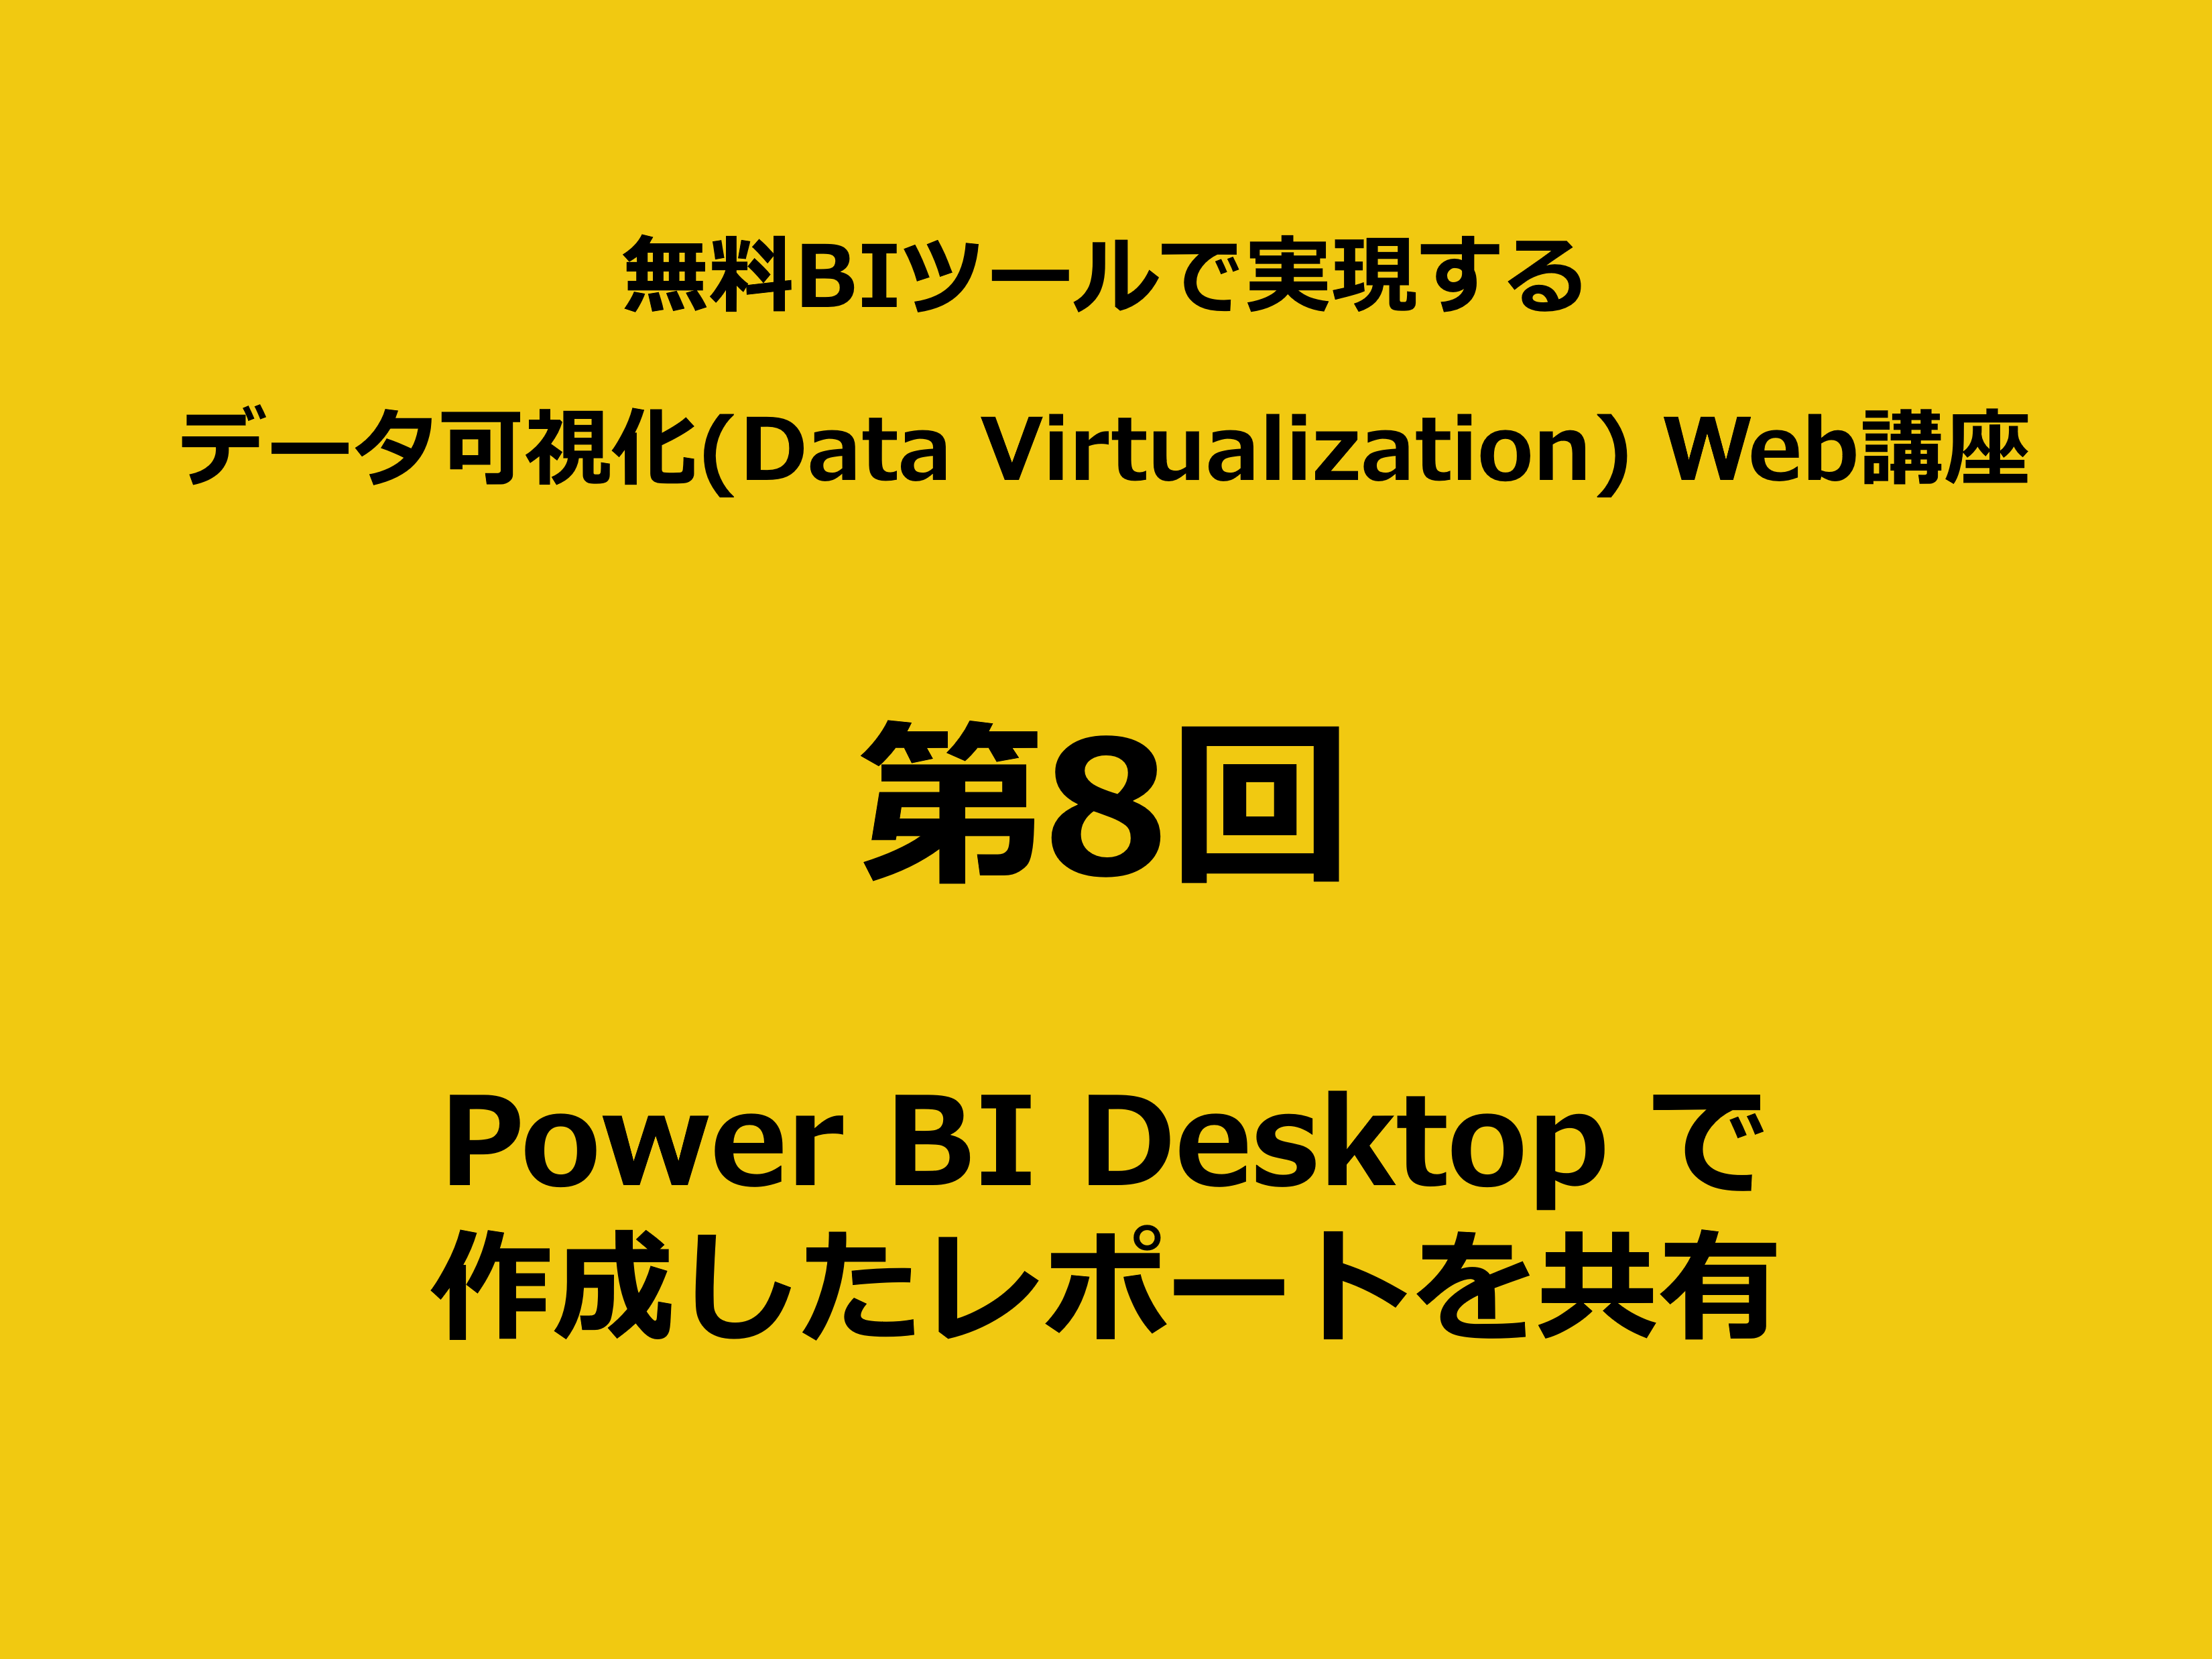 Power BI Desktop で作成したレポートを共有